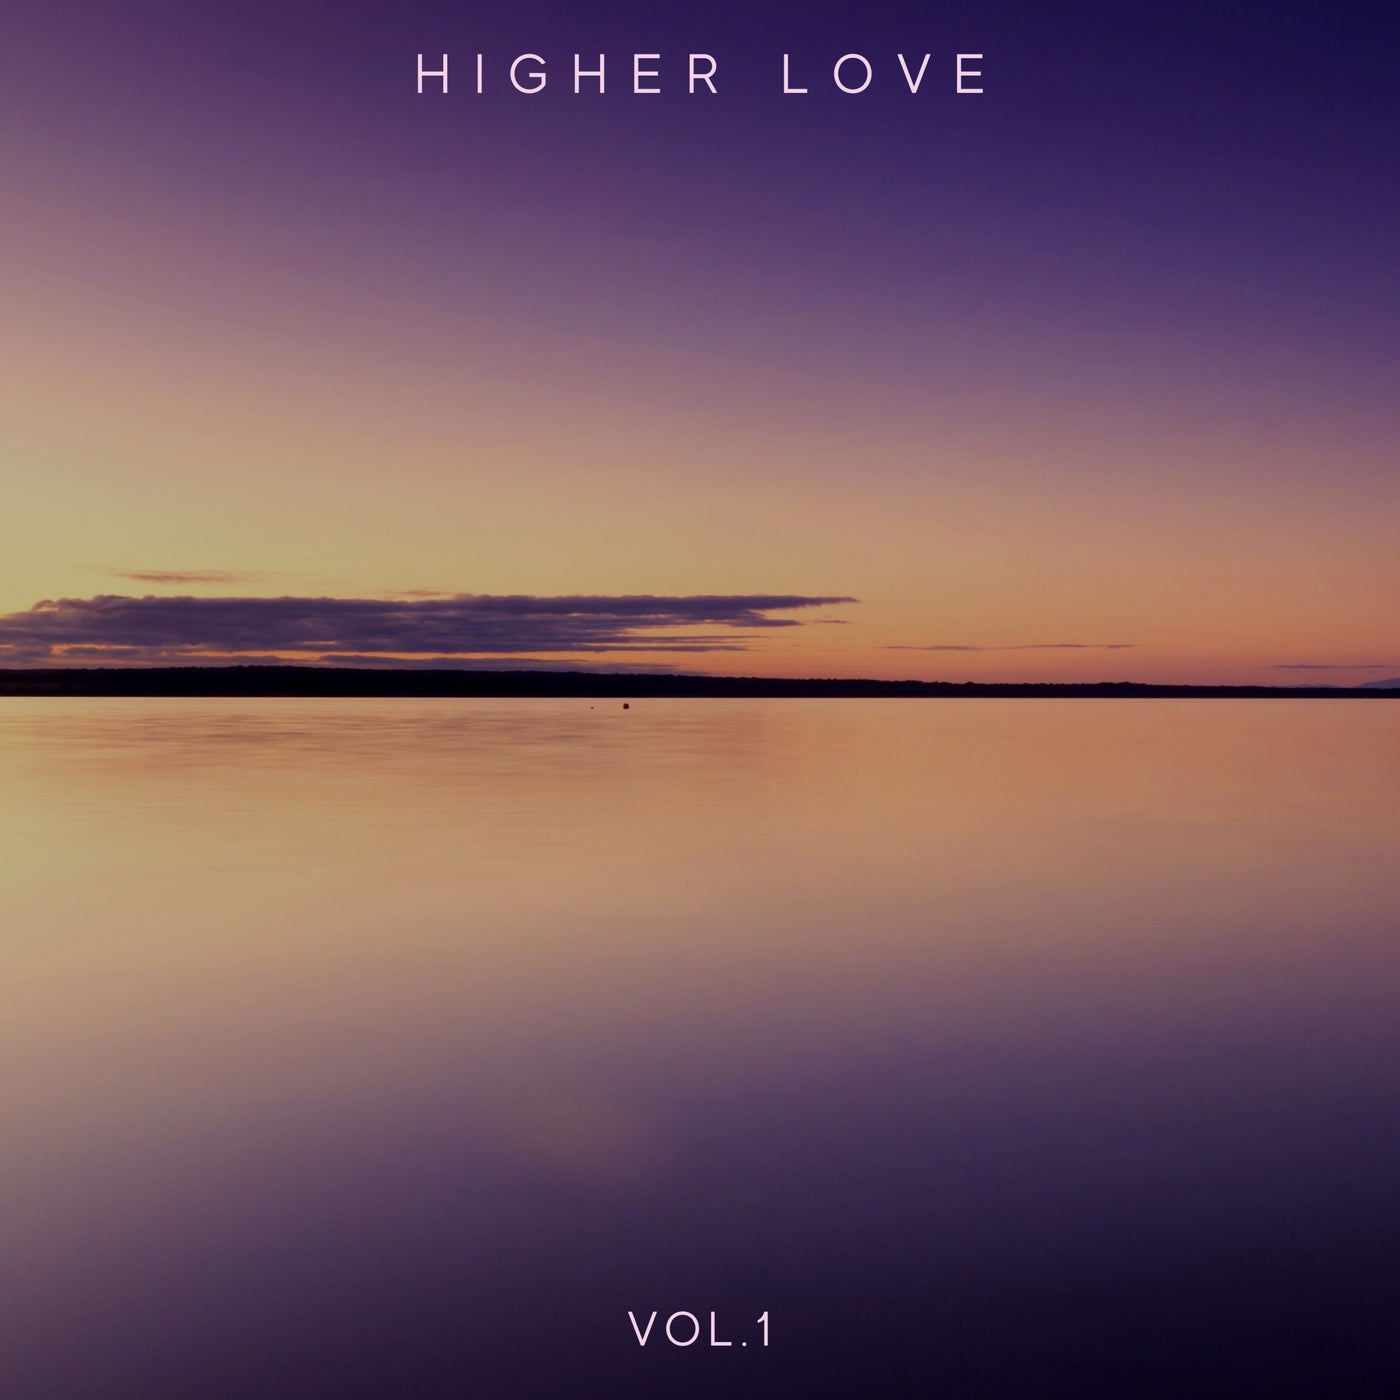 Higher Love, Vol. 1